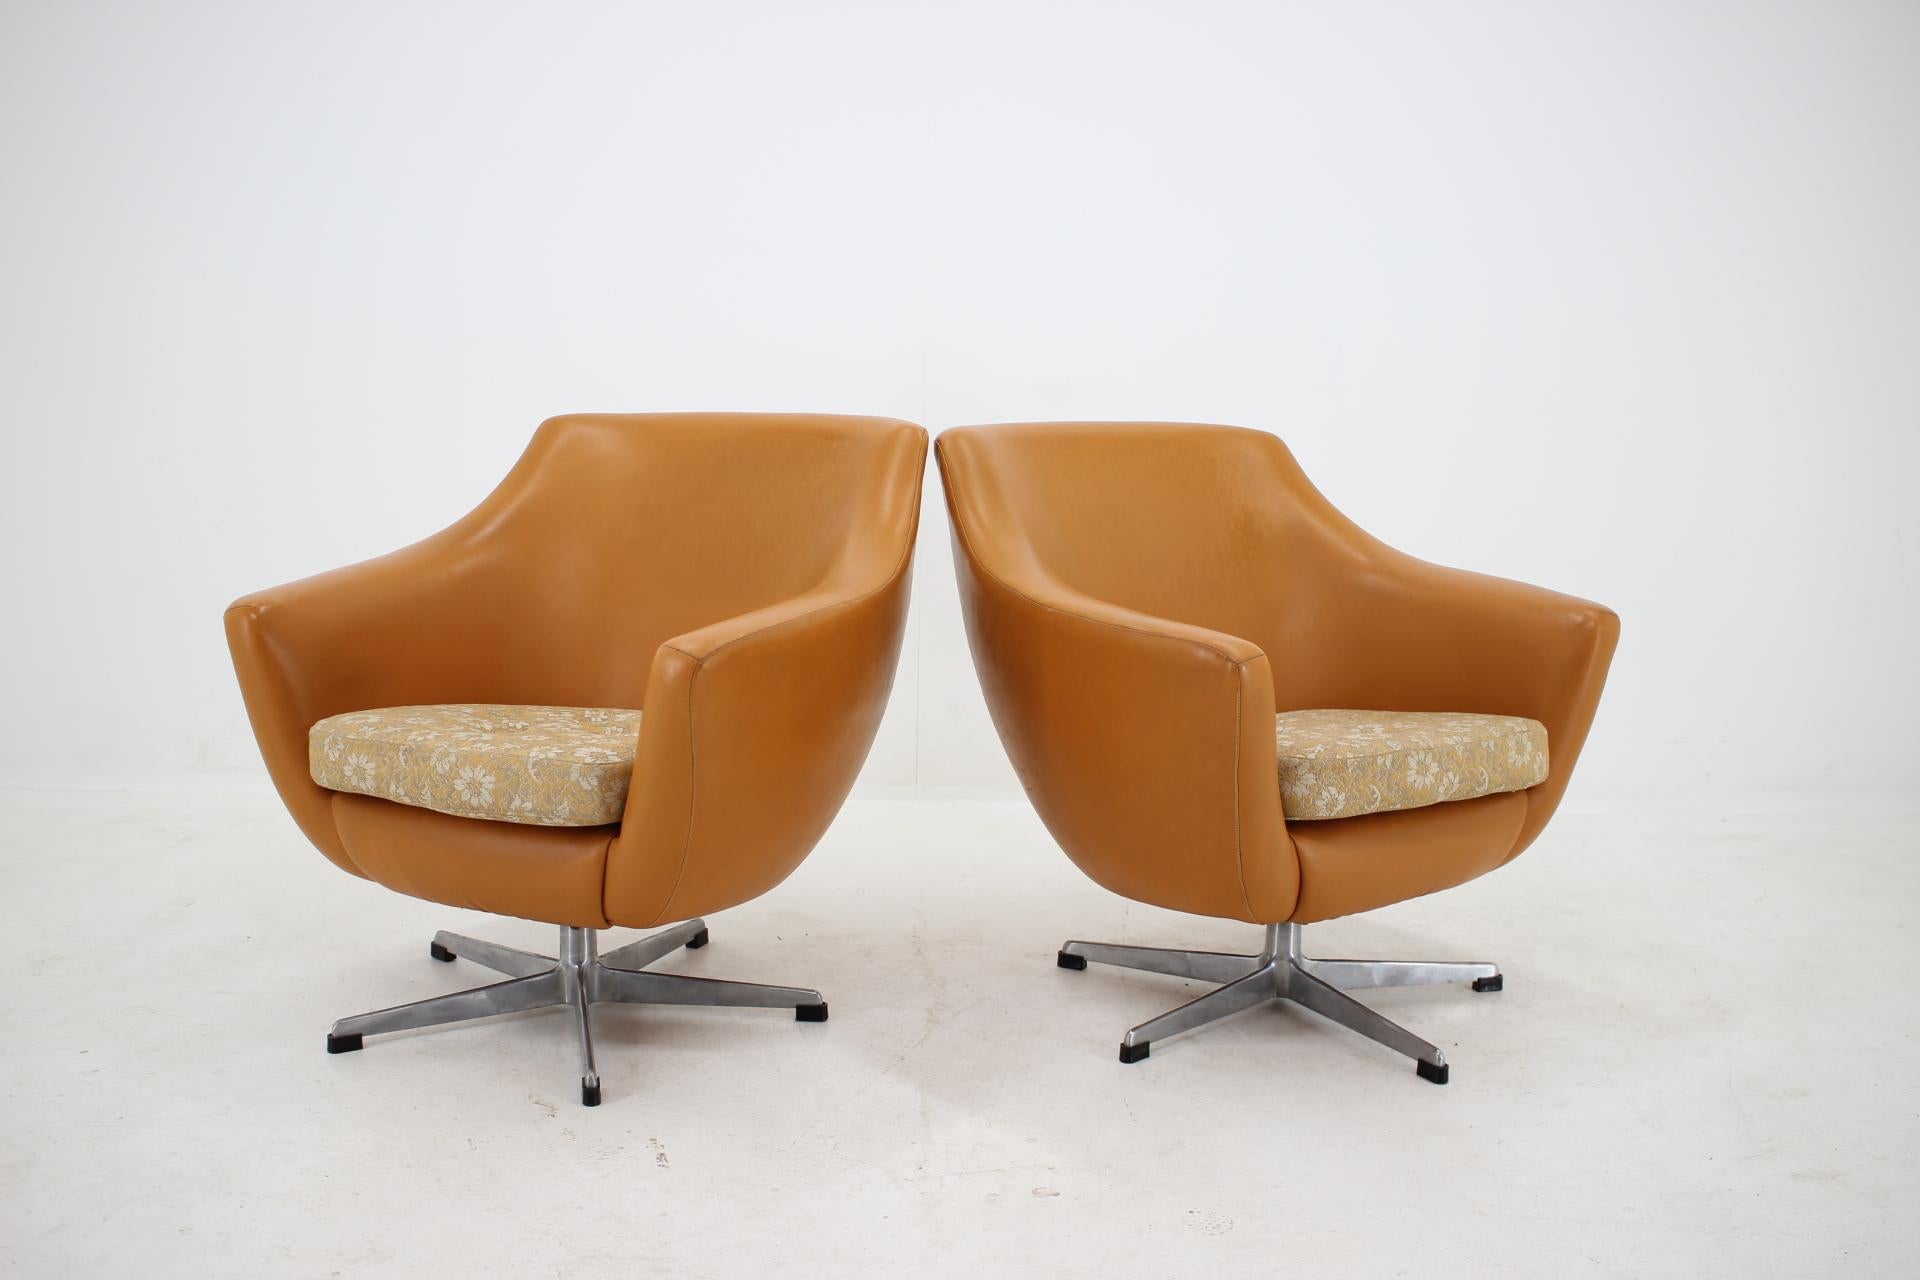 1970s swivel chairs